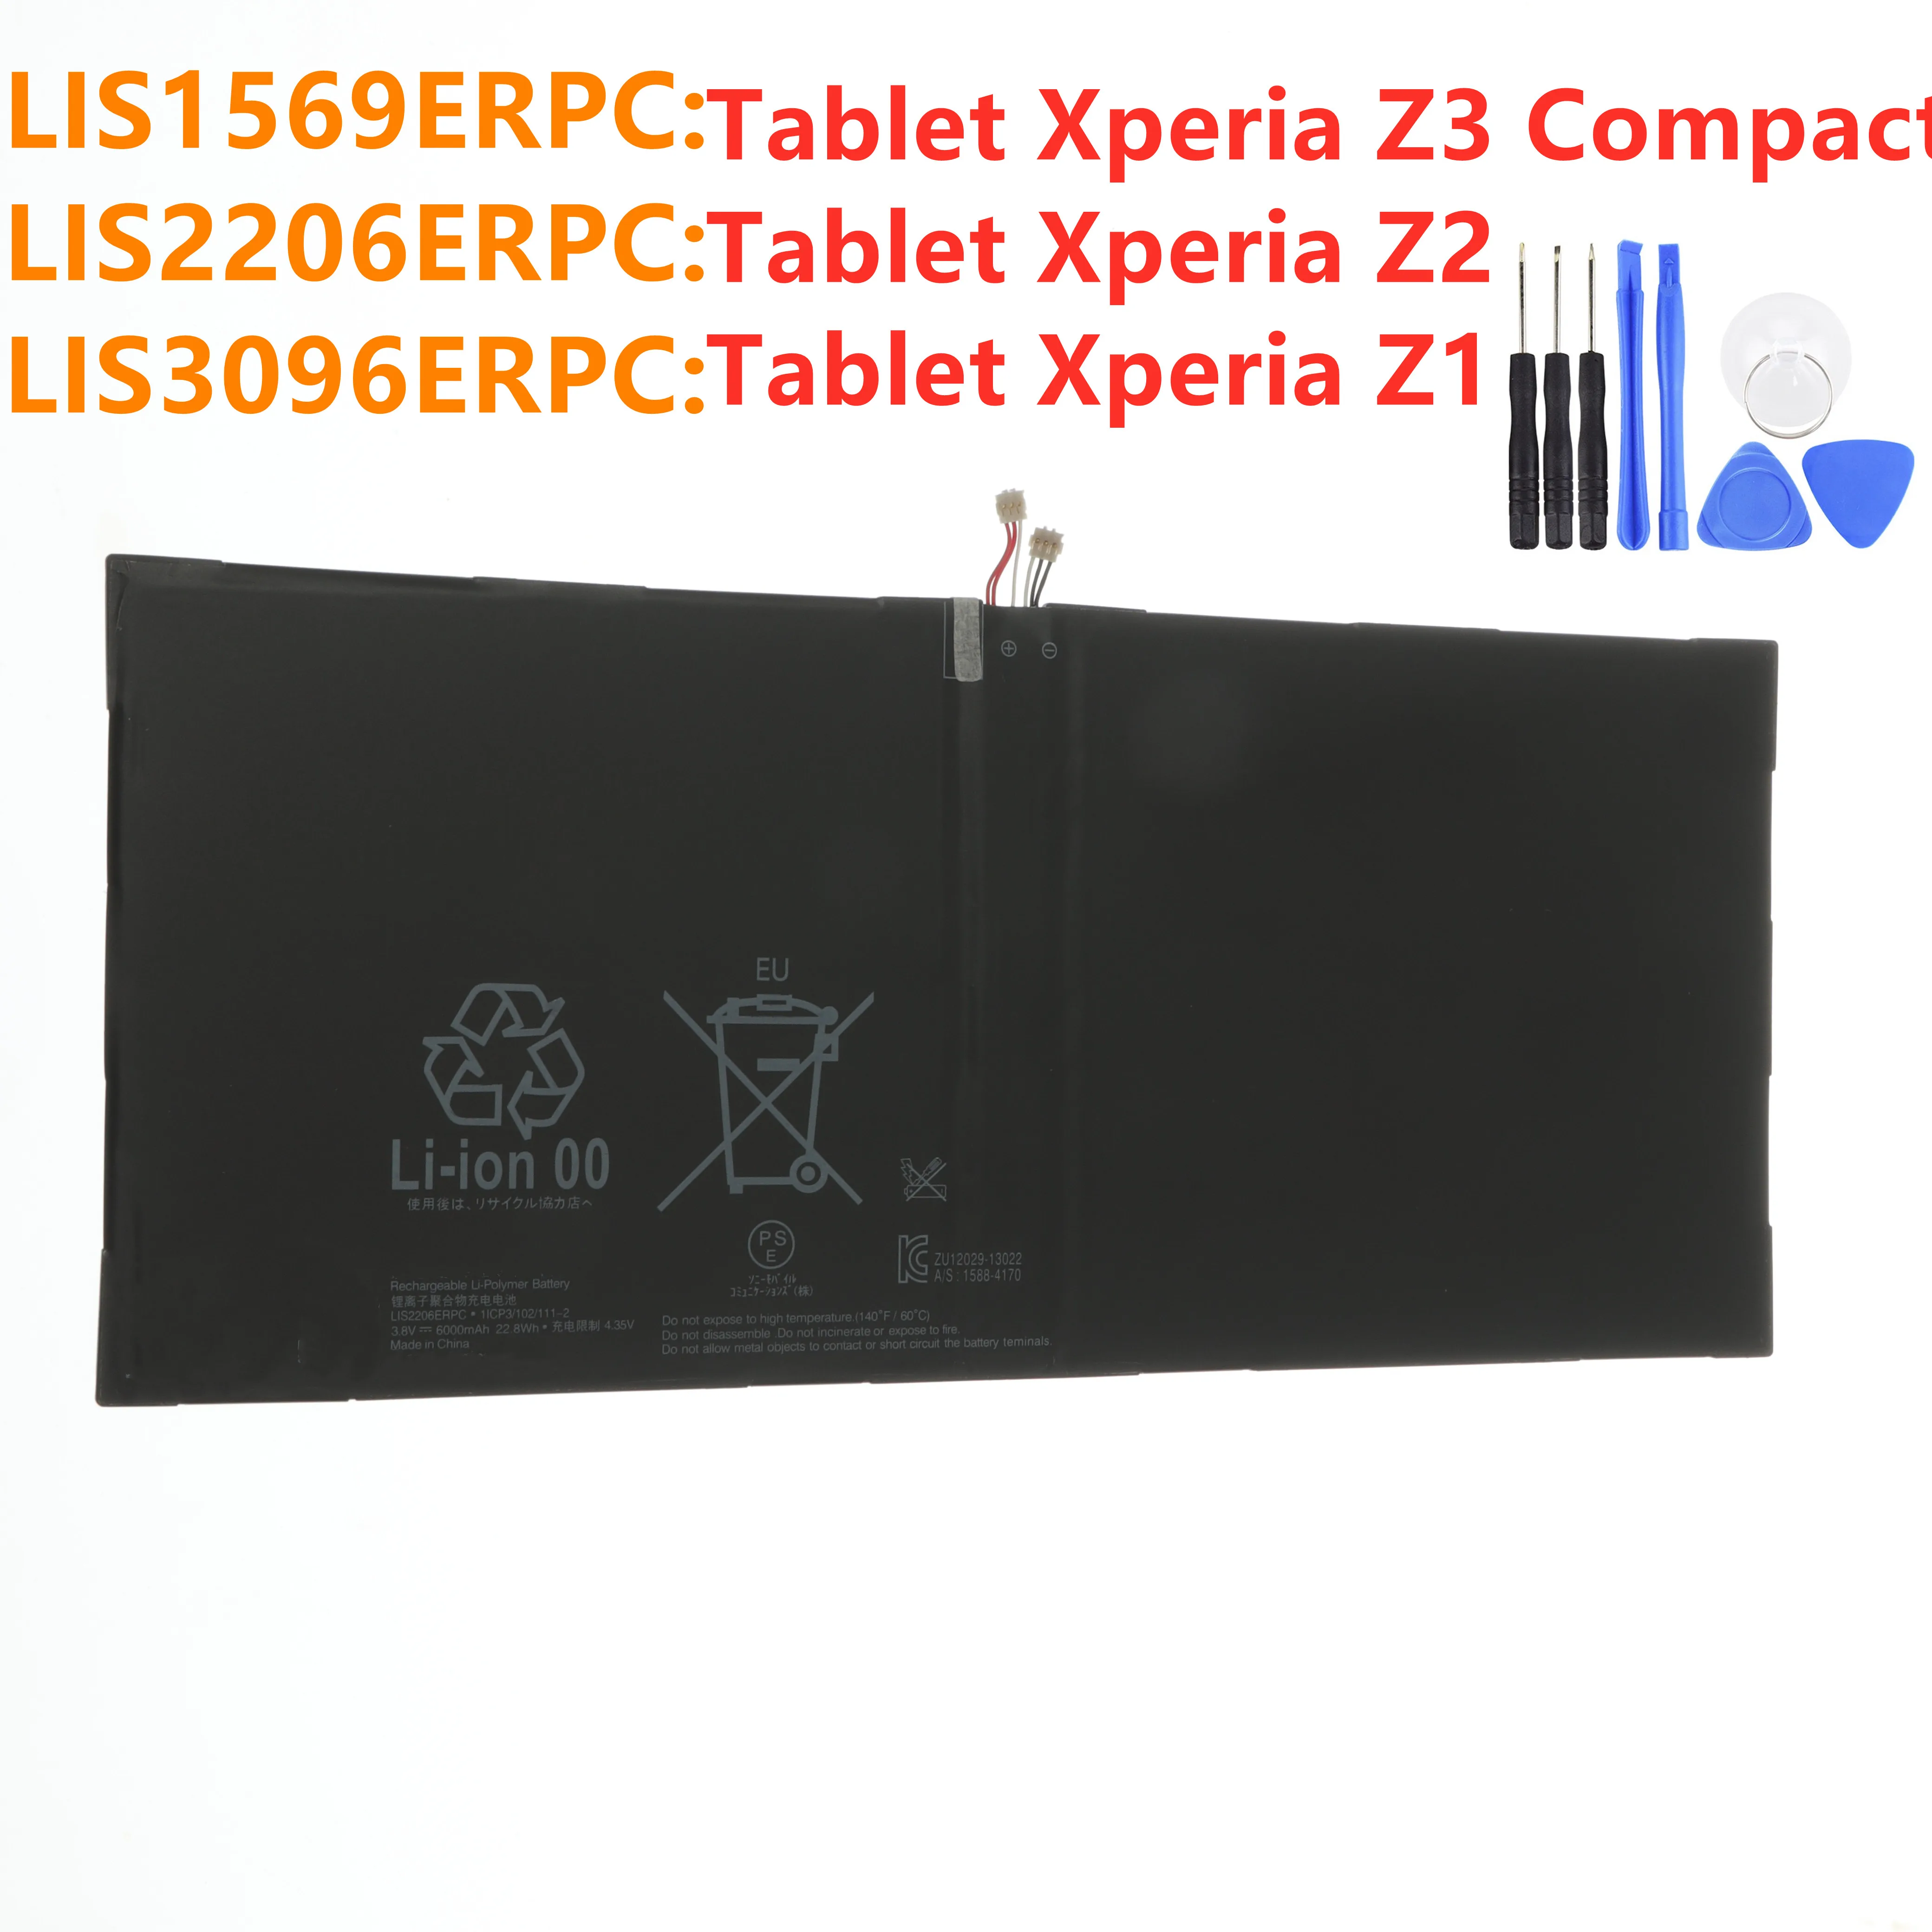 Фото Аккумулятор LIS2206ERPC для SONY Xperia Tablet Z2 SGP541CN LIS1569ERPC планшета Z3 Compact LIS3096ERPC Z +